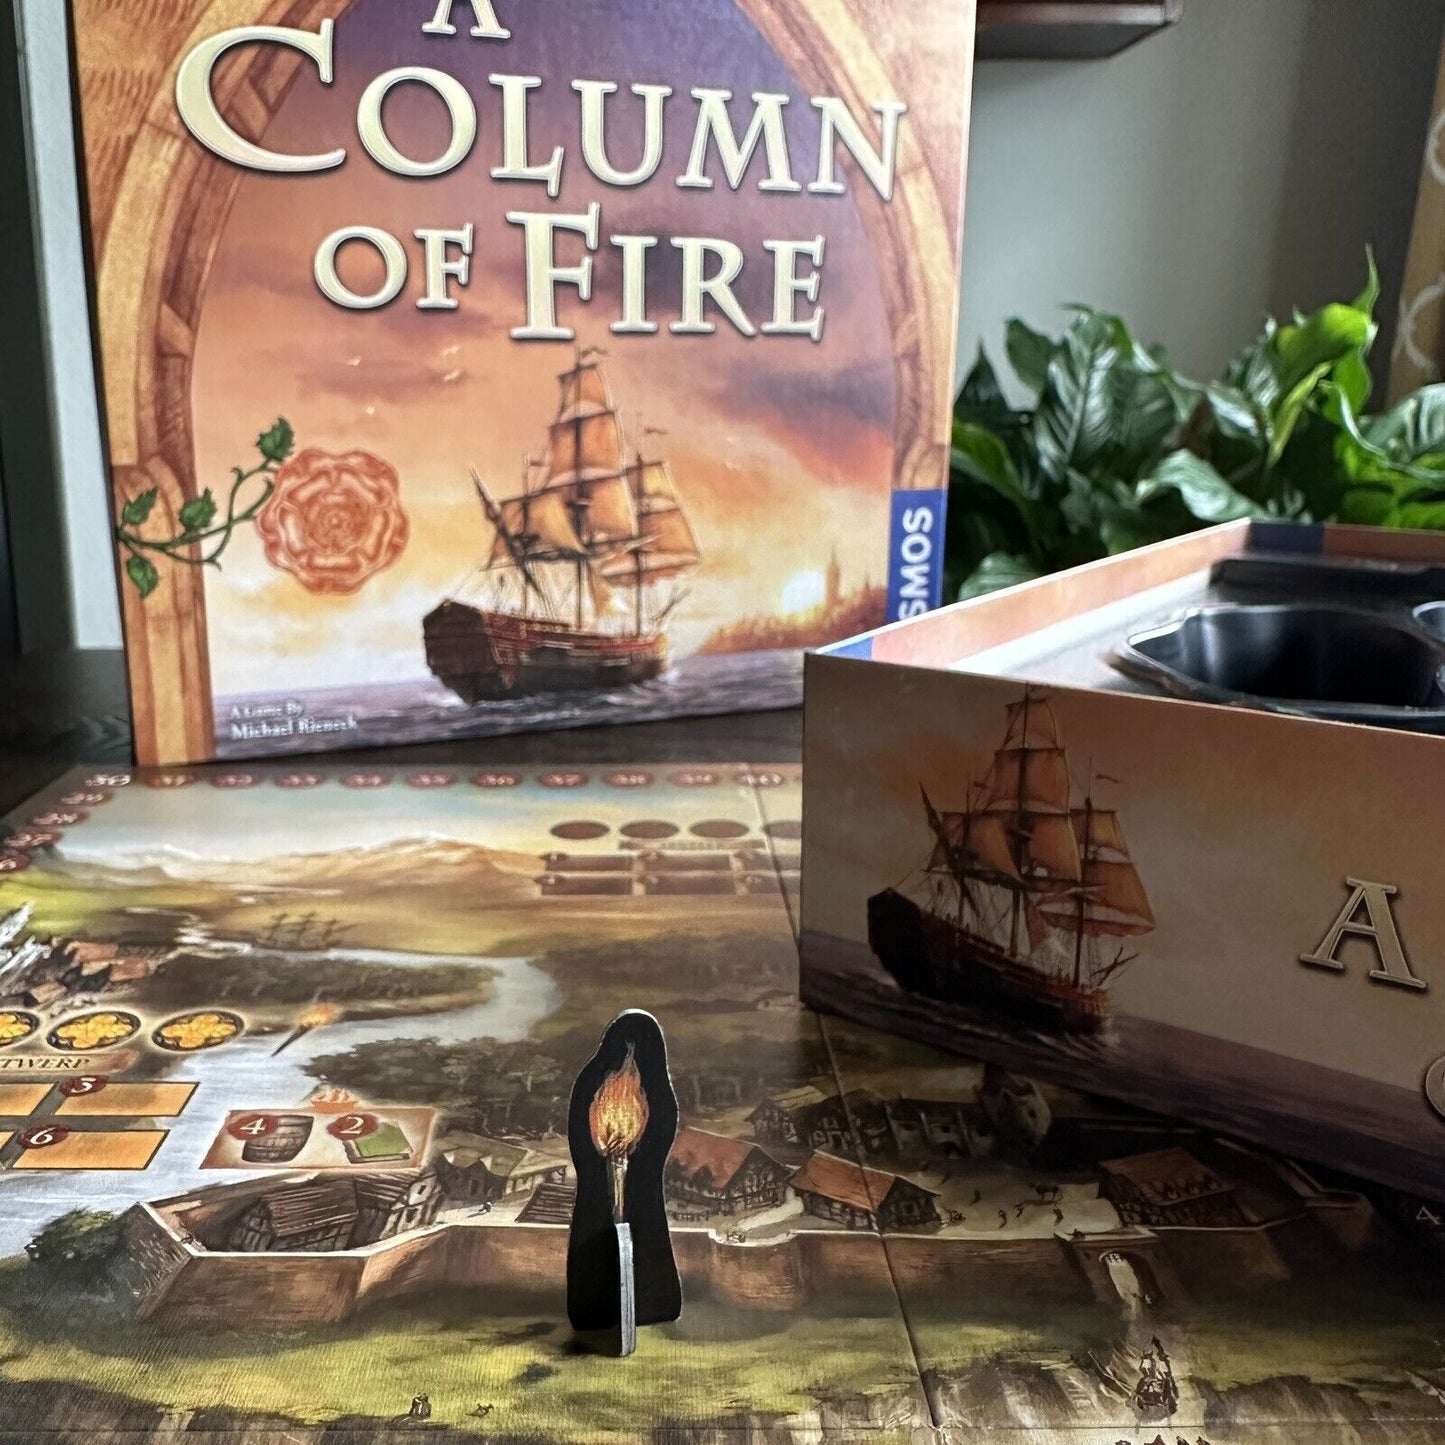 A Column of Fire Strategy Board Game by Ken Follett Sequel Pillars Of The Earth